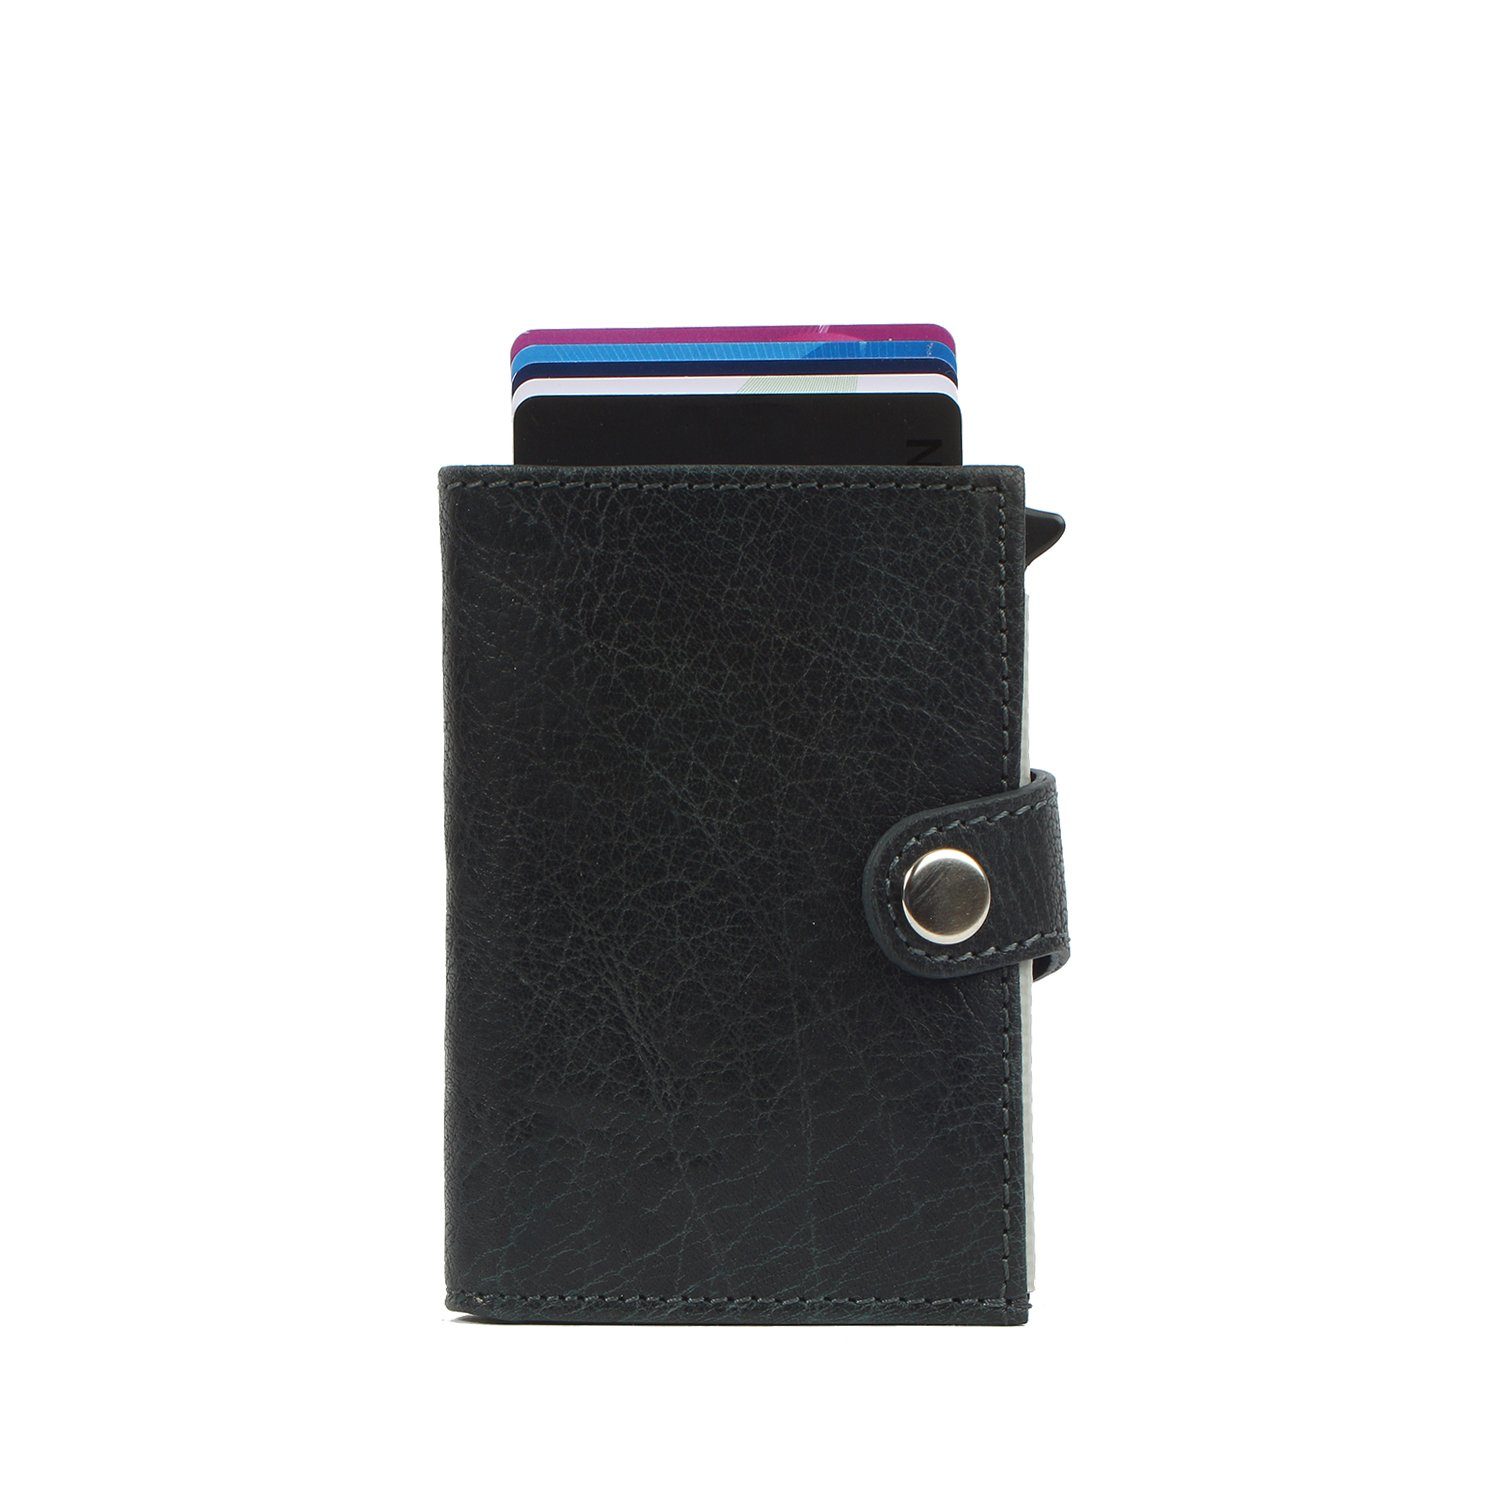 Kreditkartenbörse Margelisch single Mini leather, aus steelblue noonyu Upcycling Geldbörse Leder